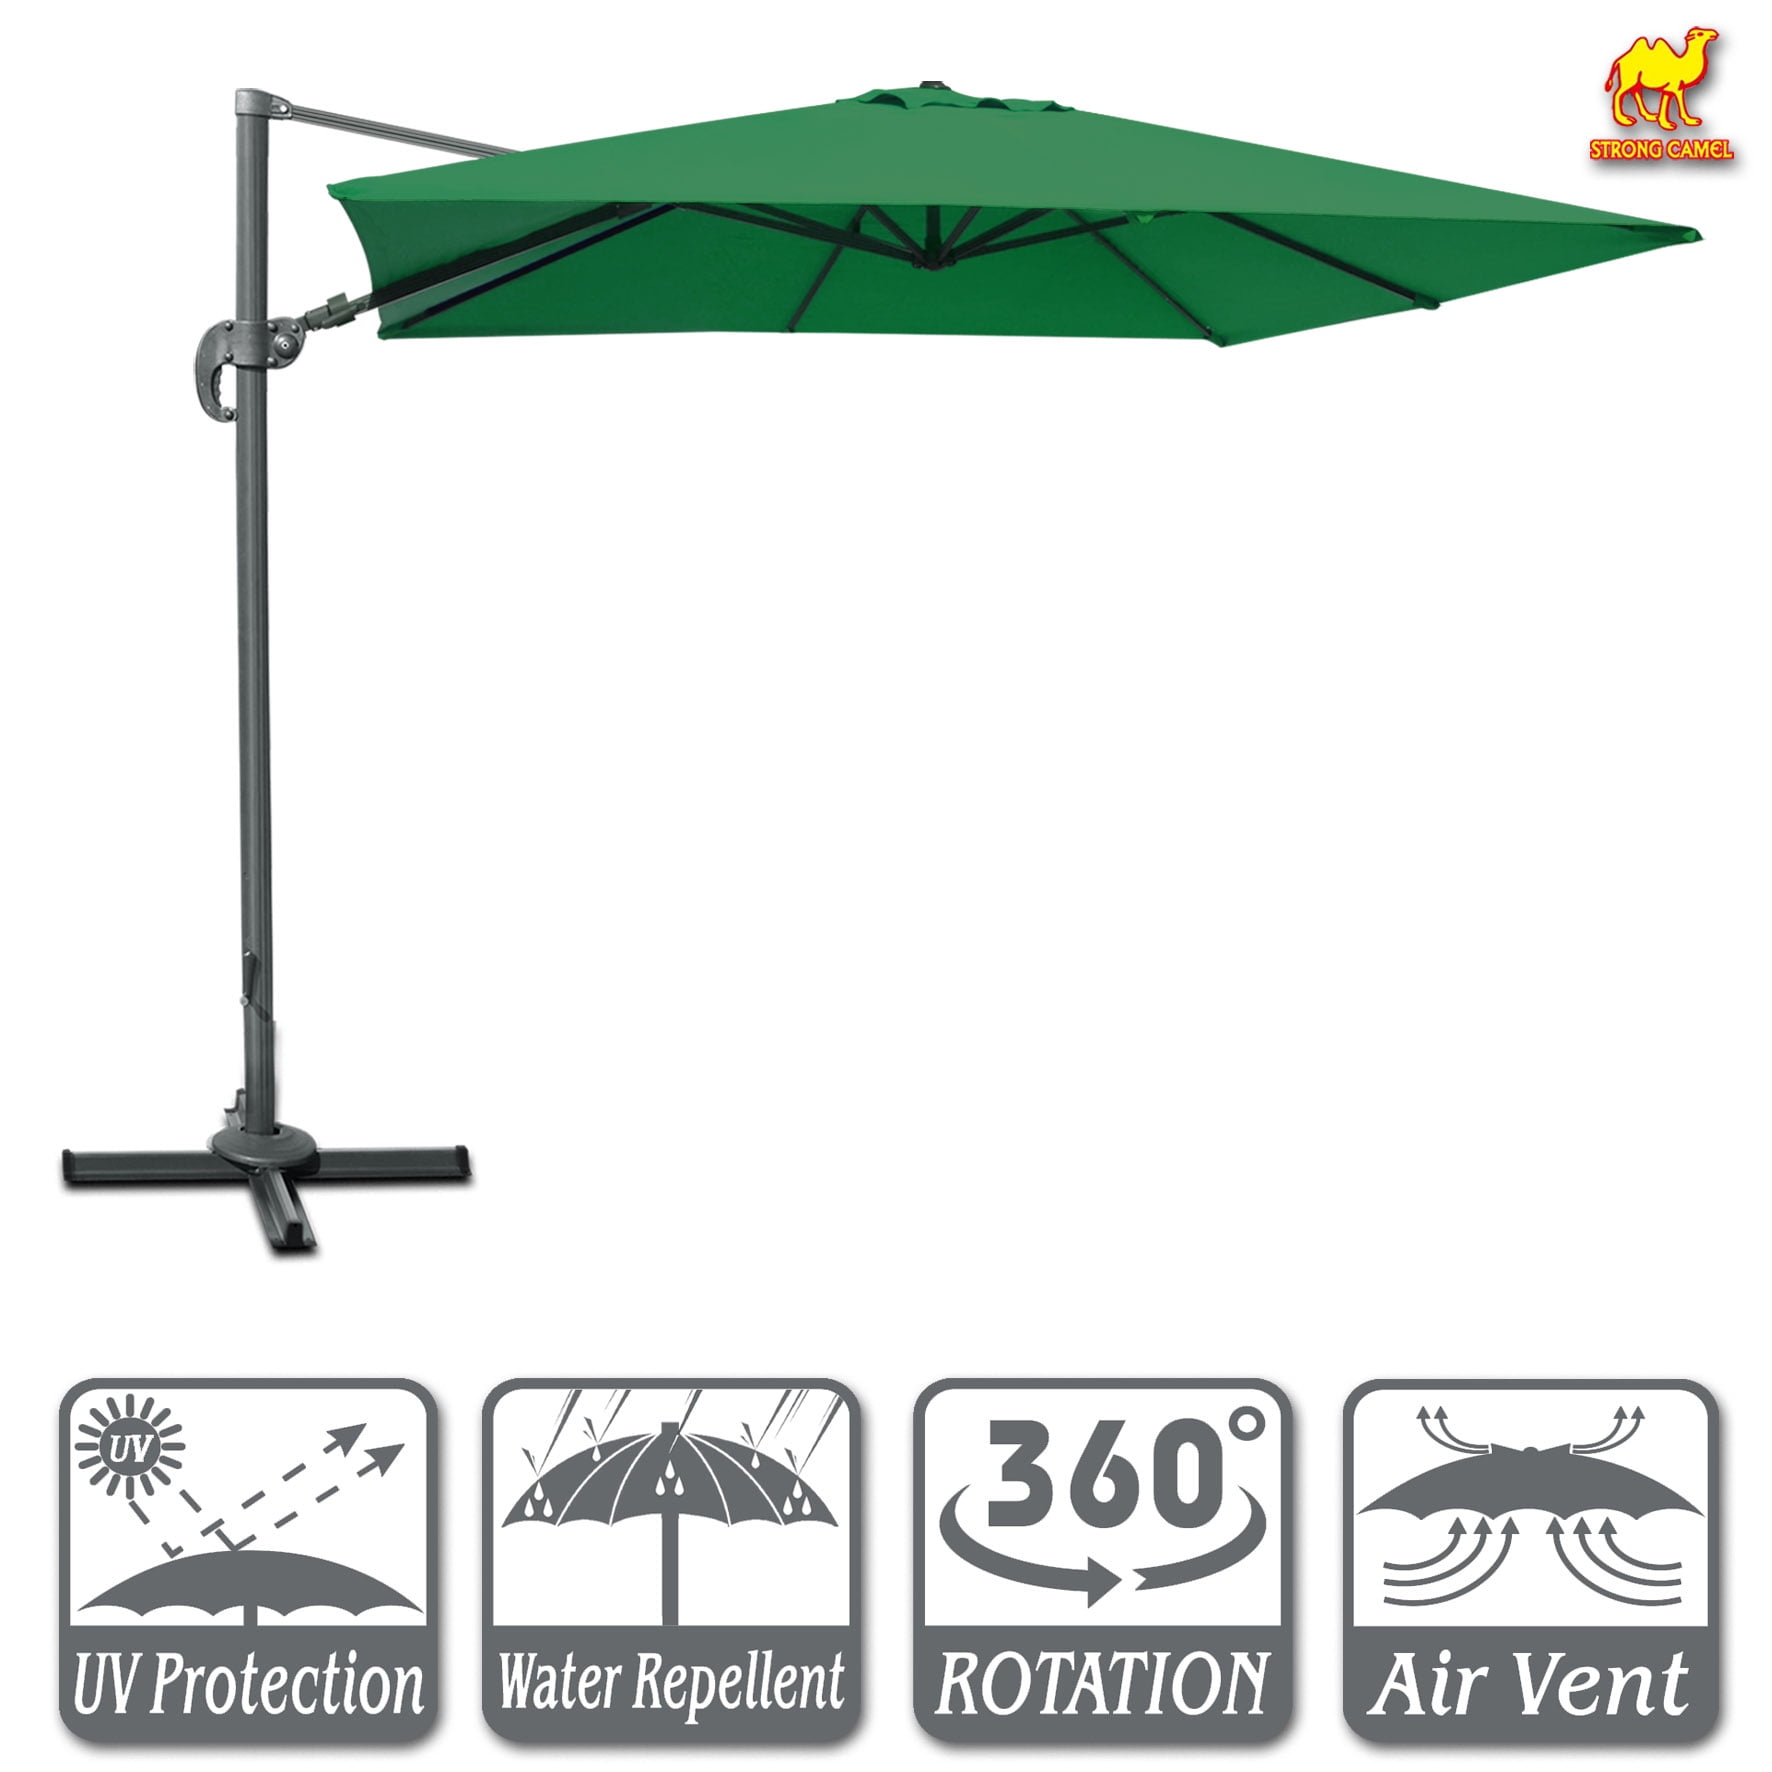 Strong Camel 10' Round Patio Umbrella Outdoor Market Umbrella with Tilt & Crank Sunshade Market